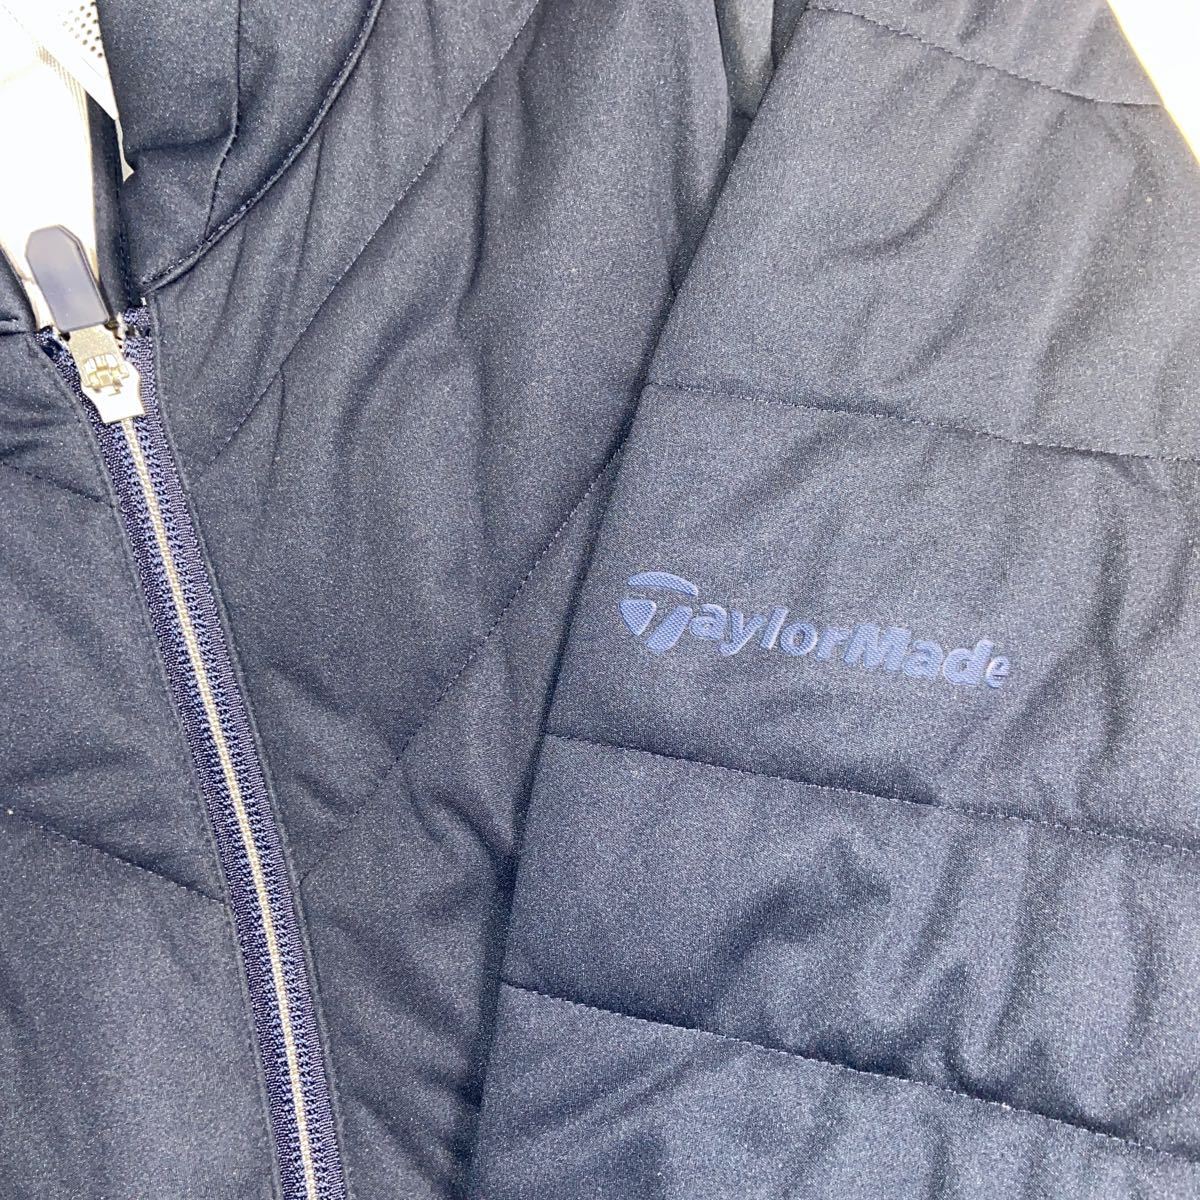 TaylorMade TaylorMade Golf wear cotton inside blouson jacket navy 